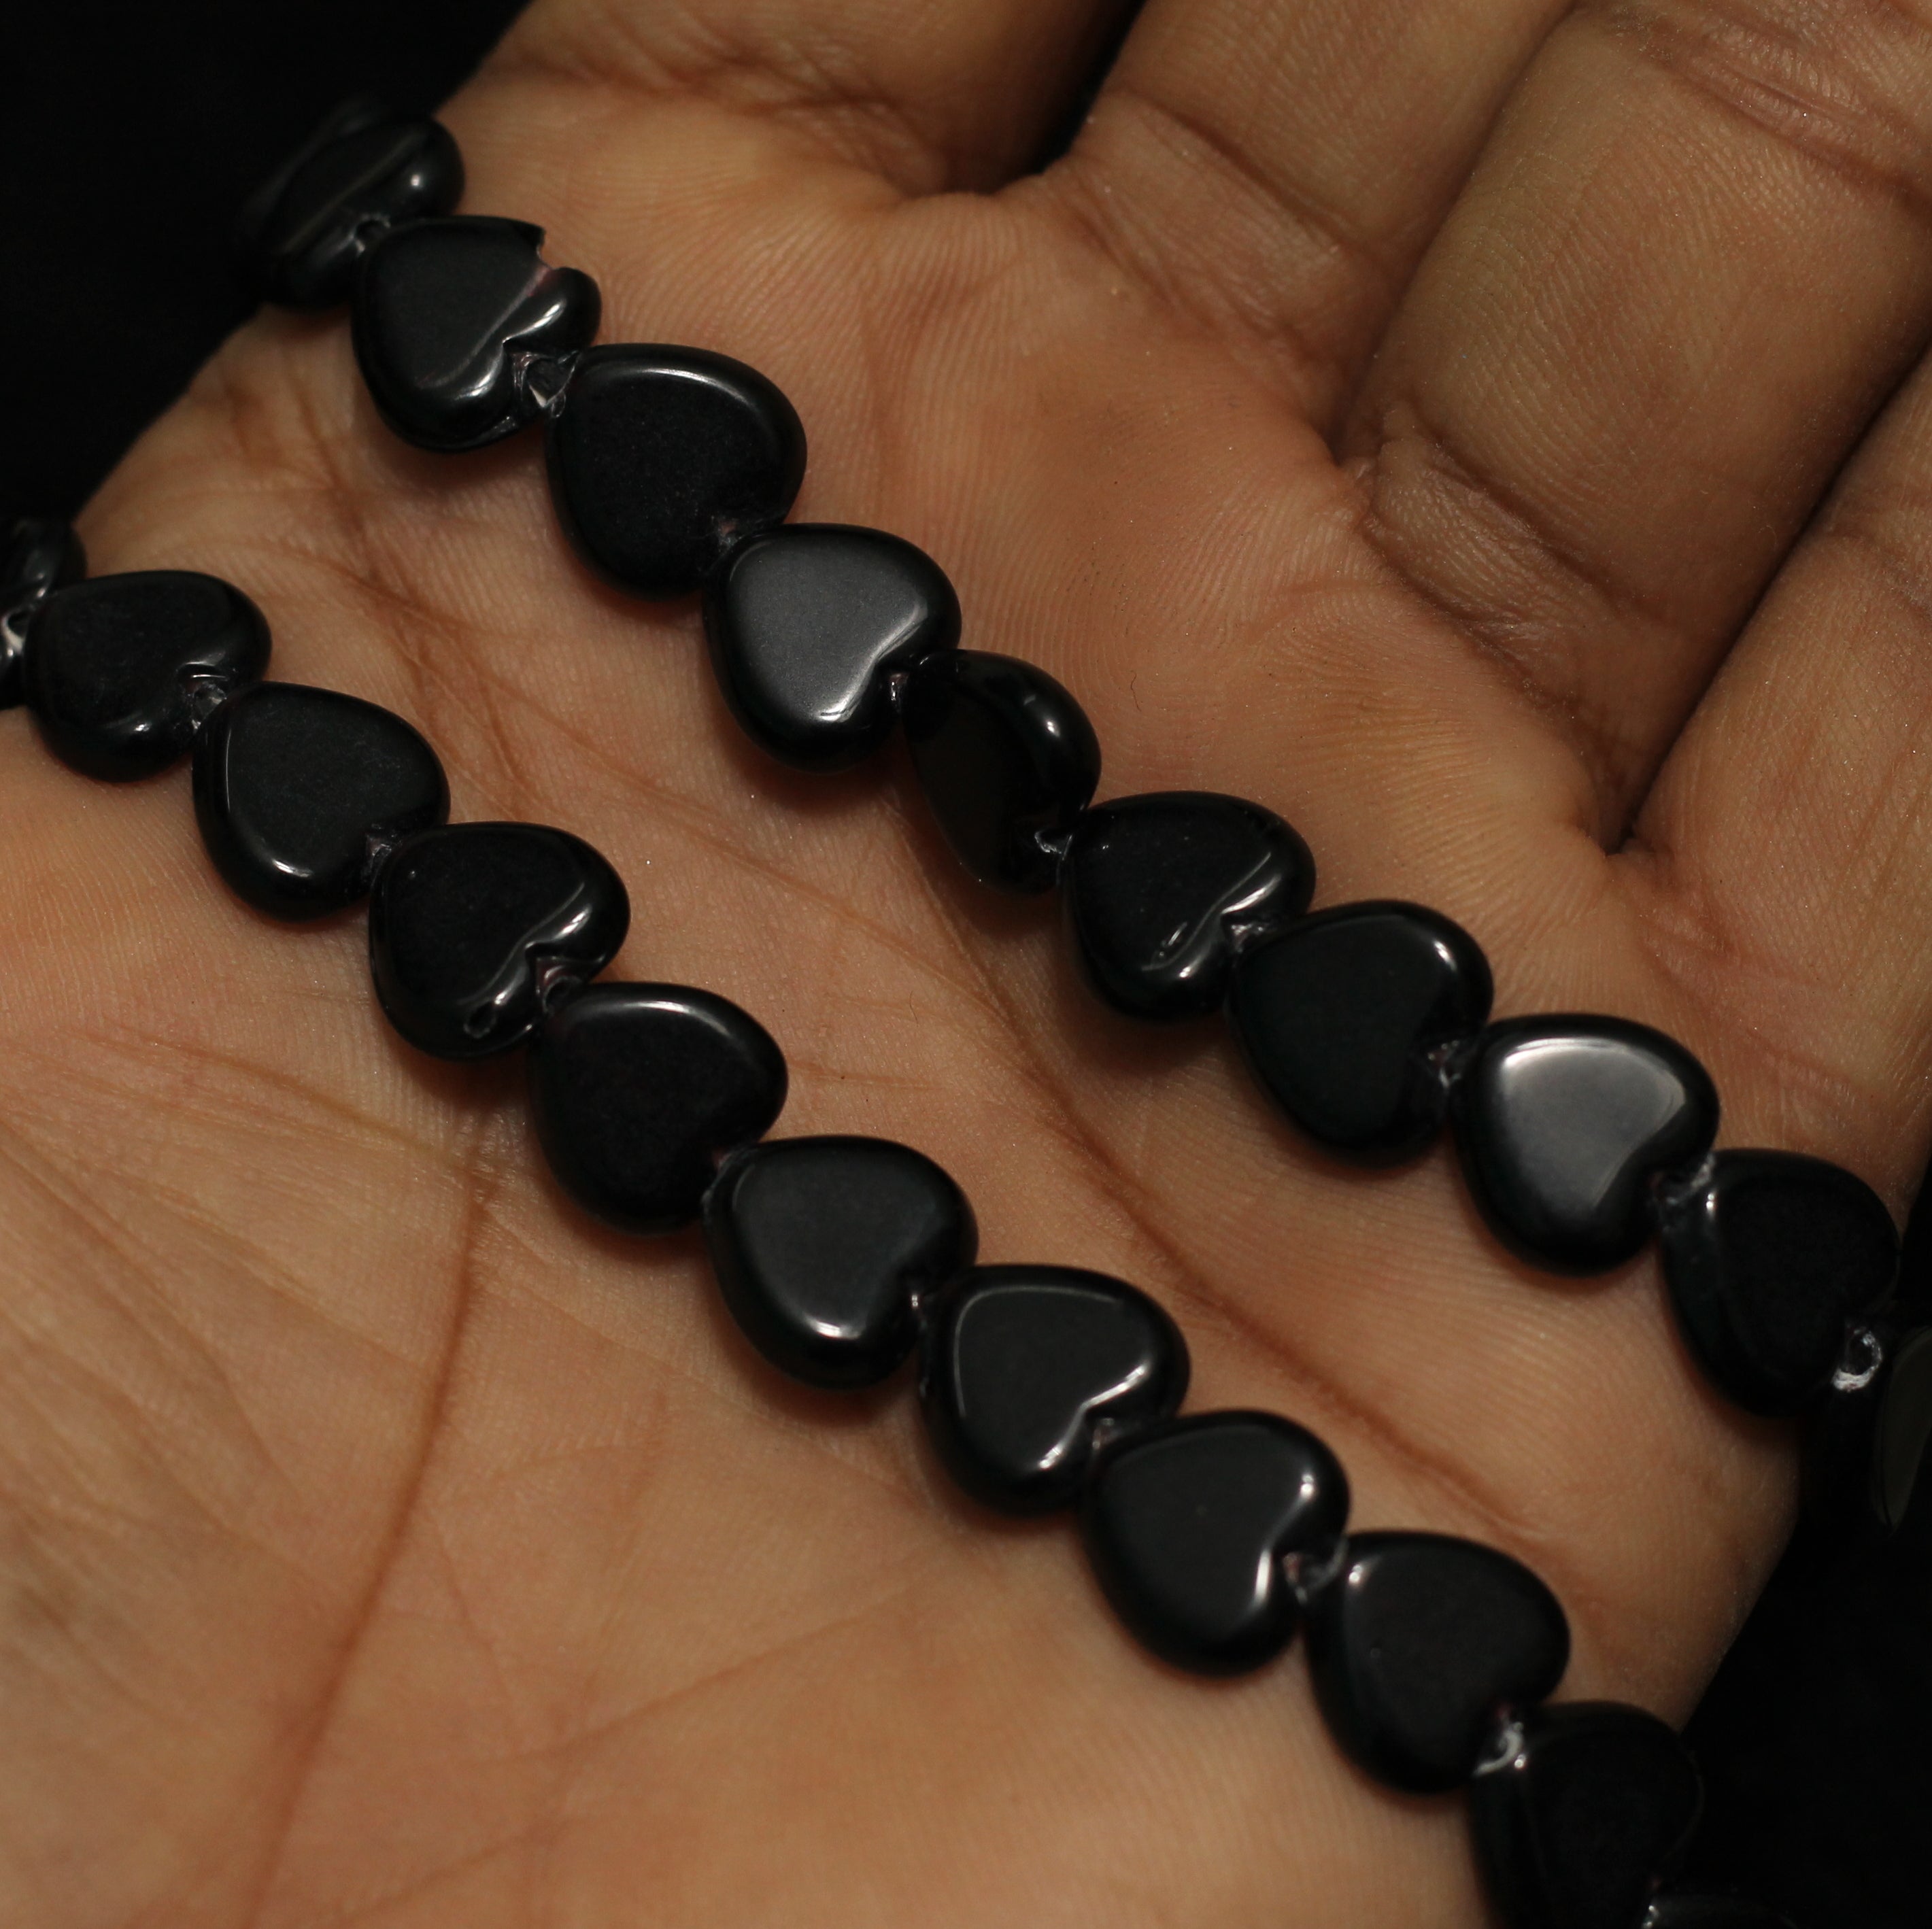 1 String 11X10mm Glass Heart Beads Black